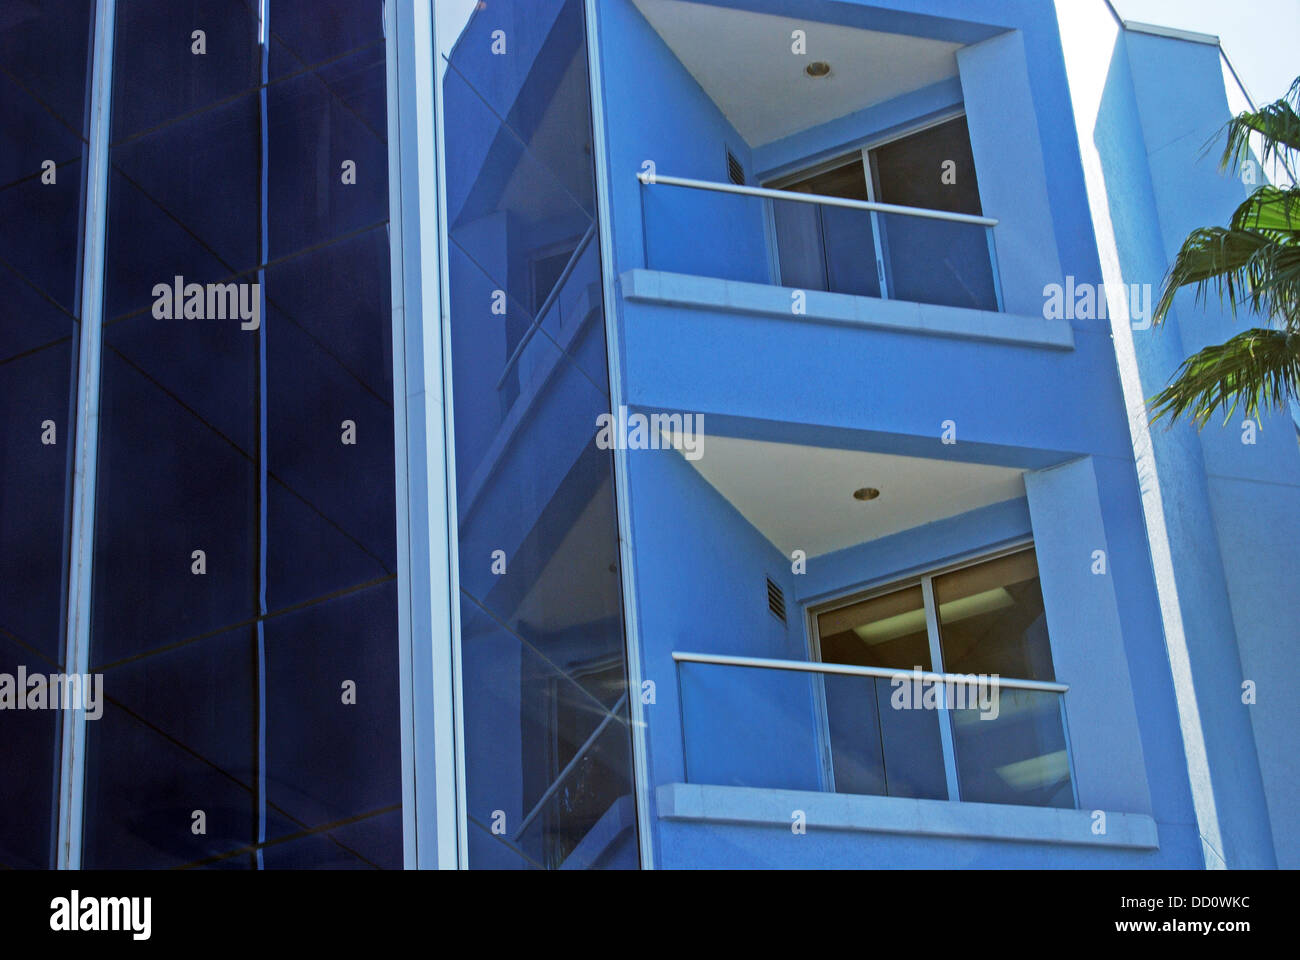 Balcons contemporains, George Town, Grand Cayman, Cayman Islands, Caribbean. Banque D'Images